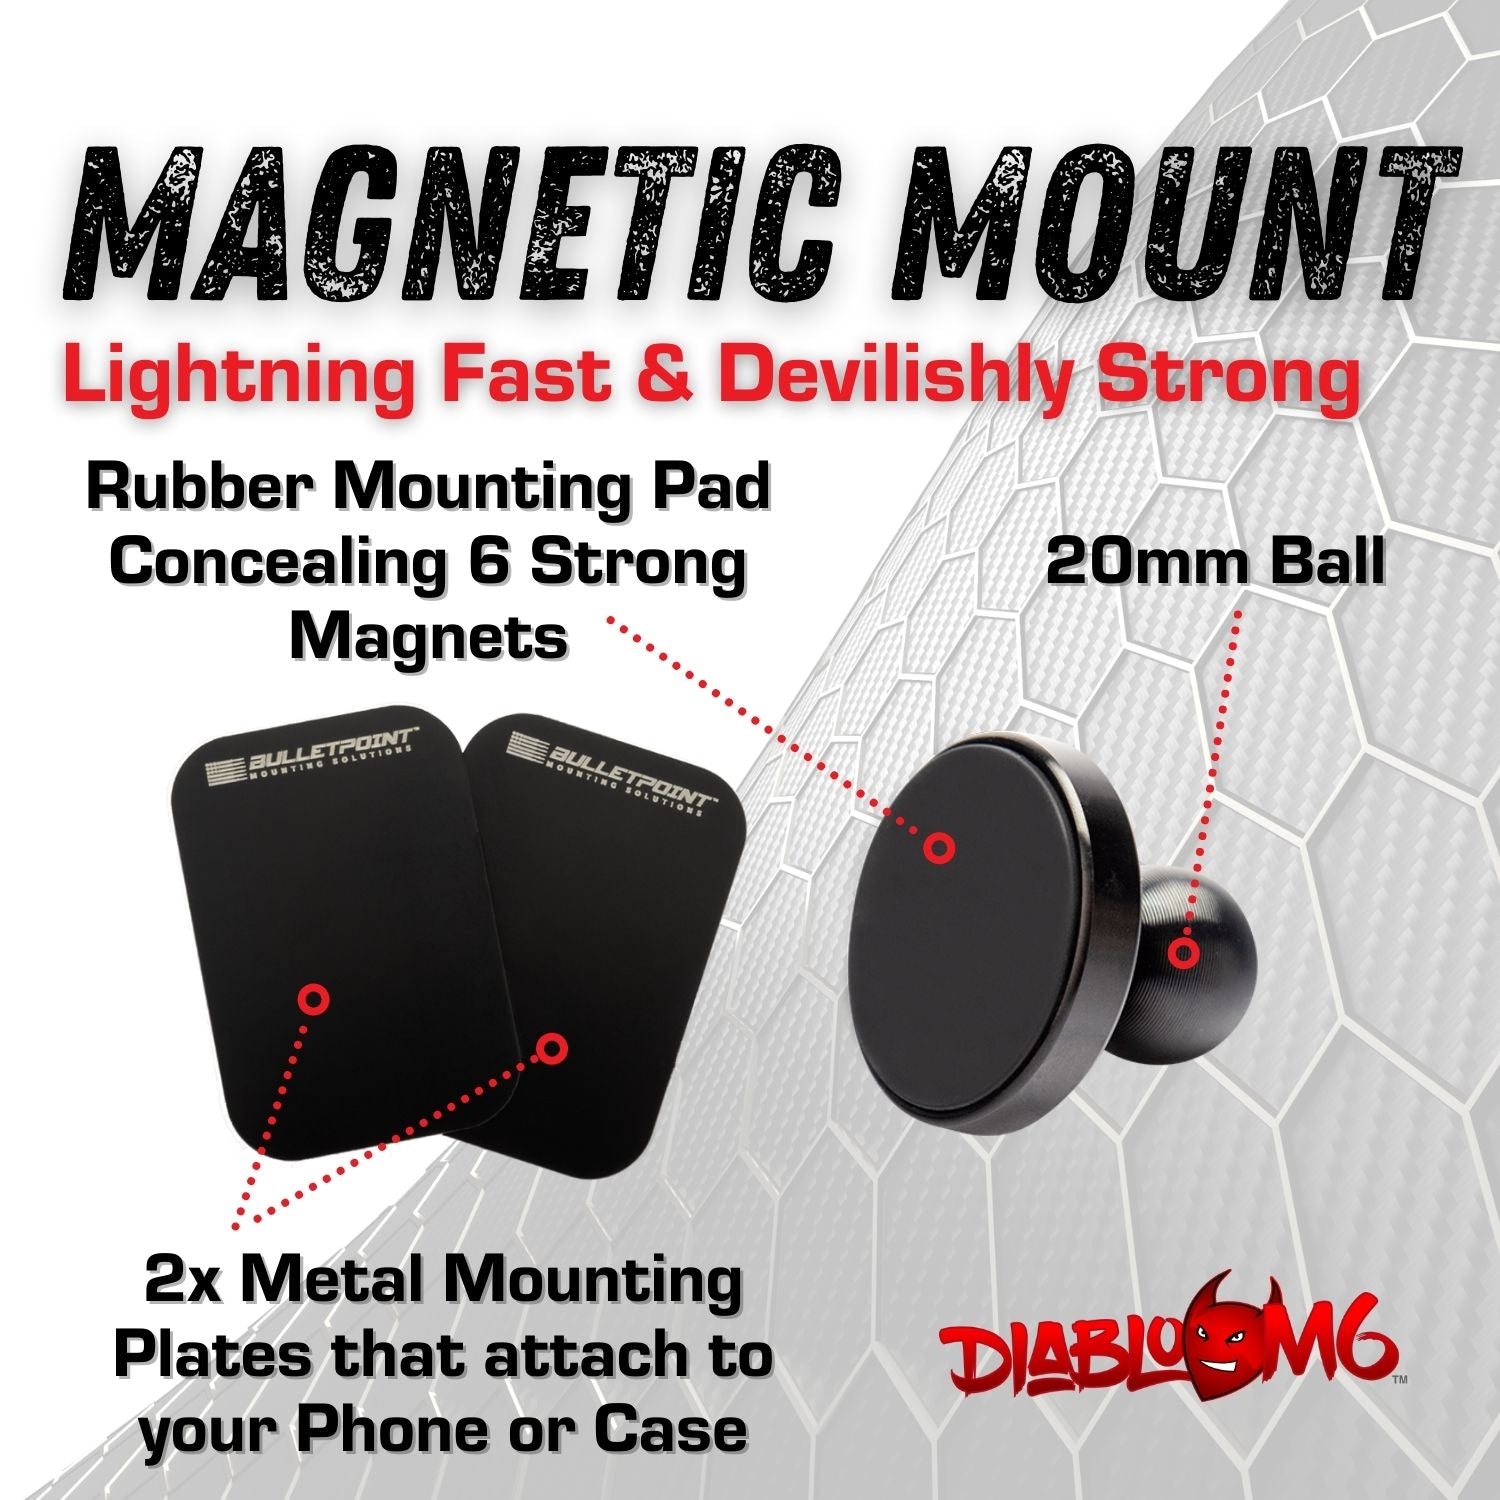 DiabloM6 Magnetic Phone Mount Holder for Jeep Wrangler JK (2007-2010), TJ (97-06) - Universal Application - Single Ball